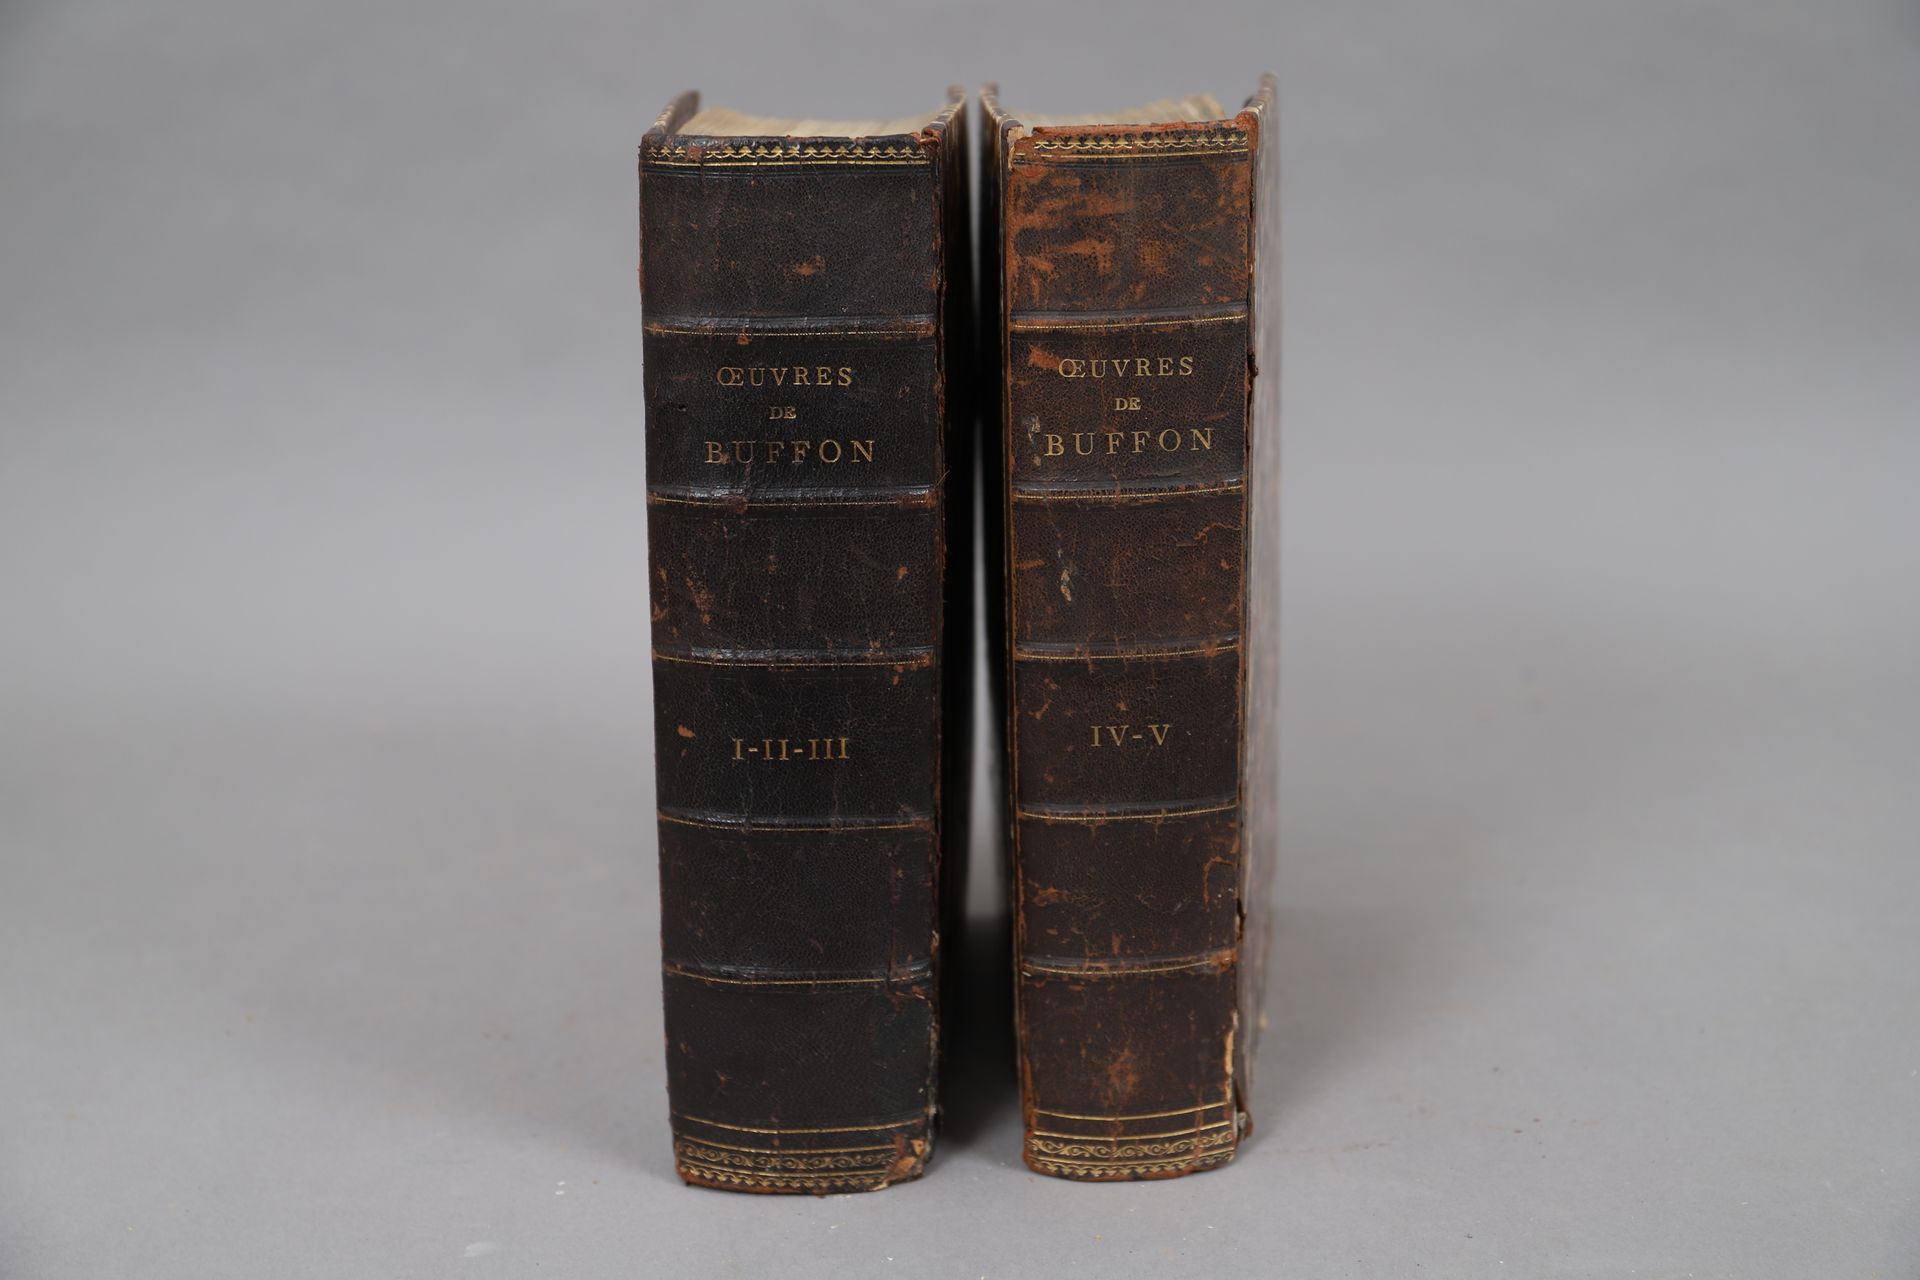 Null ŒUVRES de BUFFON

5 tomes reliés en deux volumes.